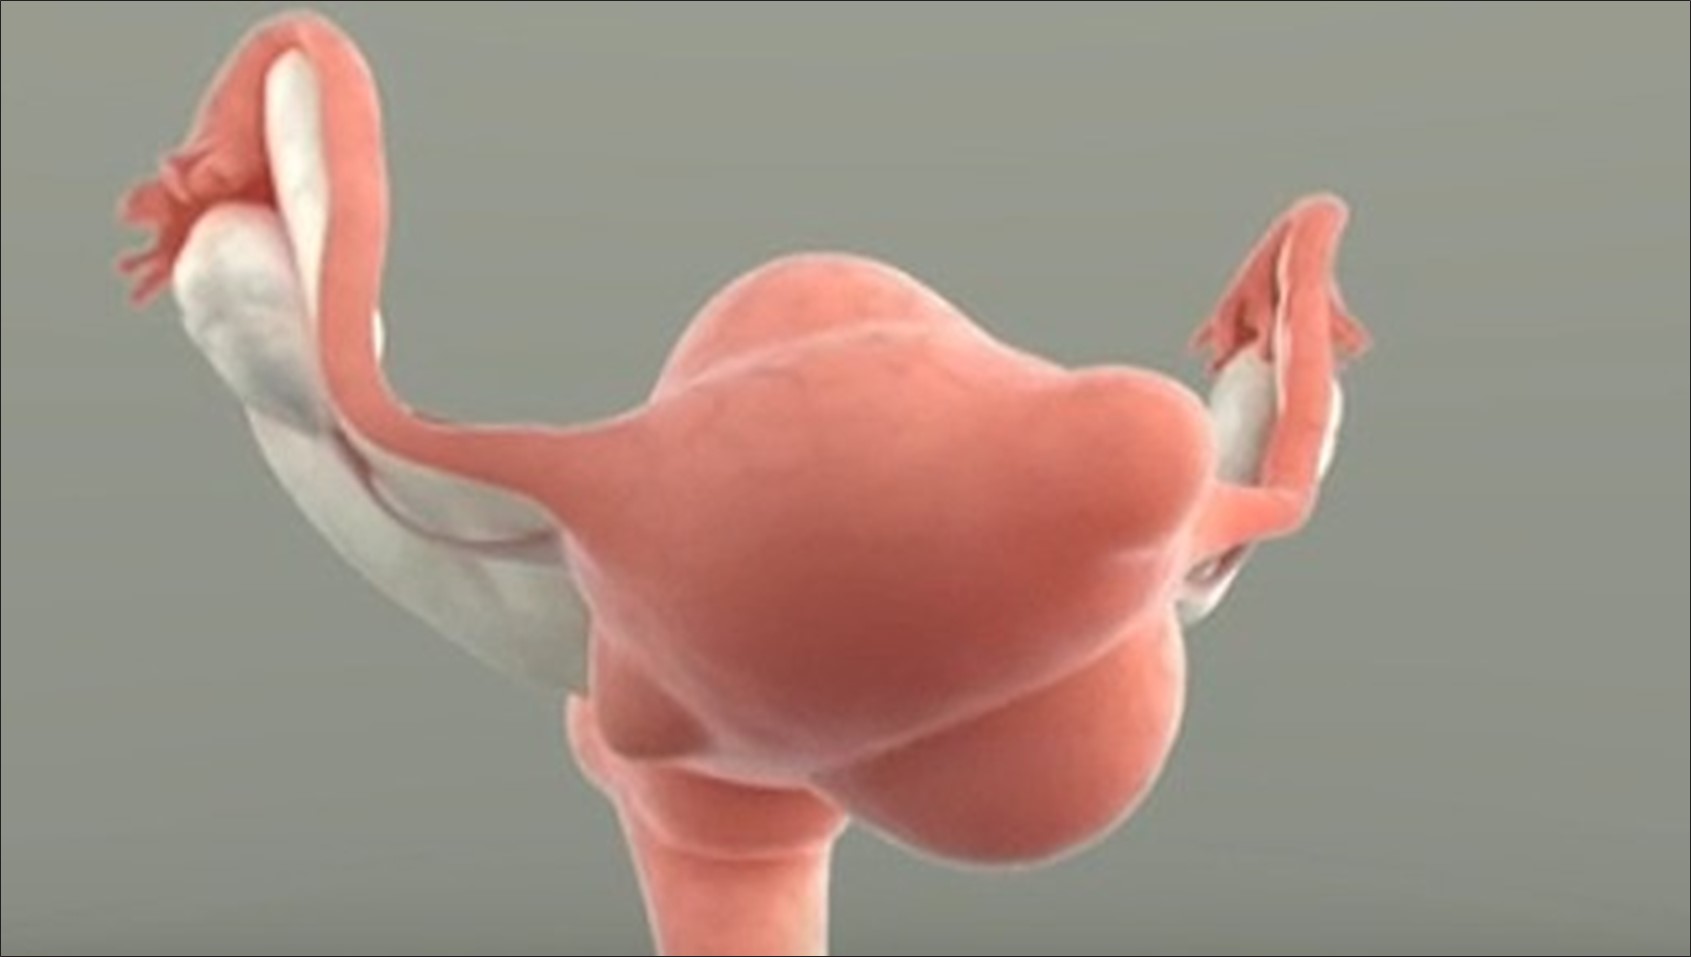 The visual rotates around the uterus.